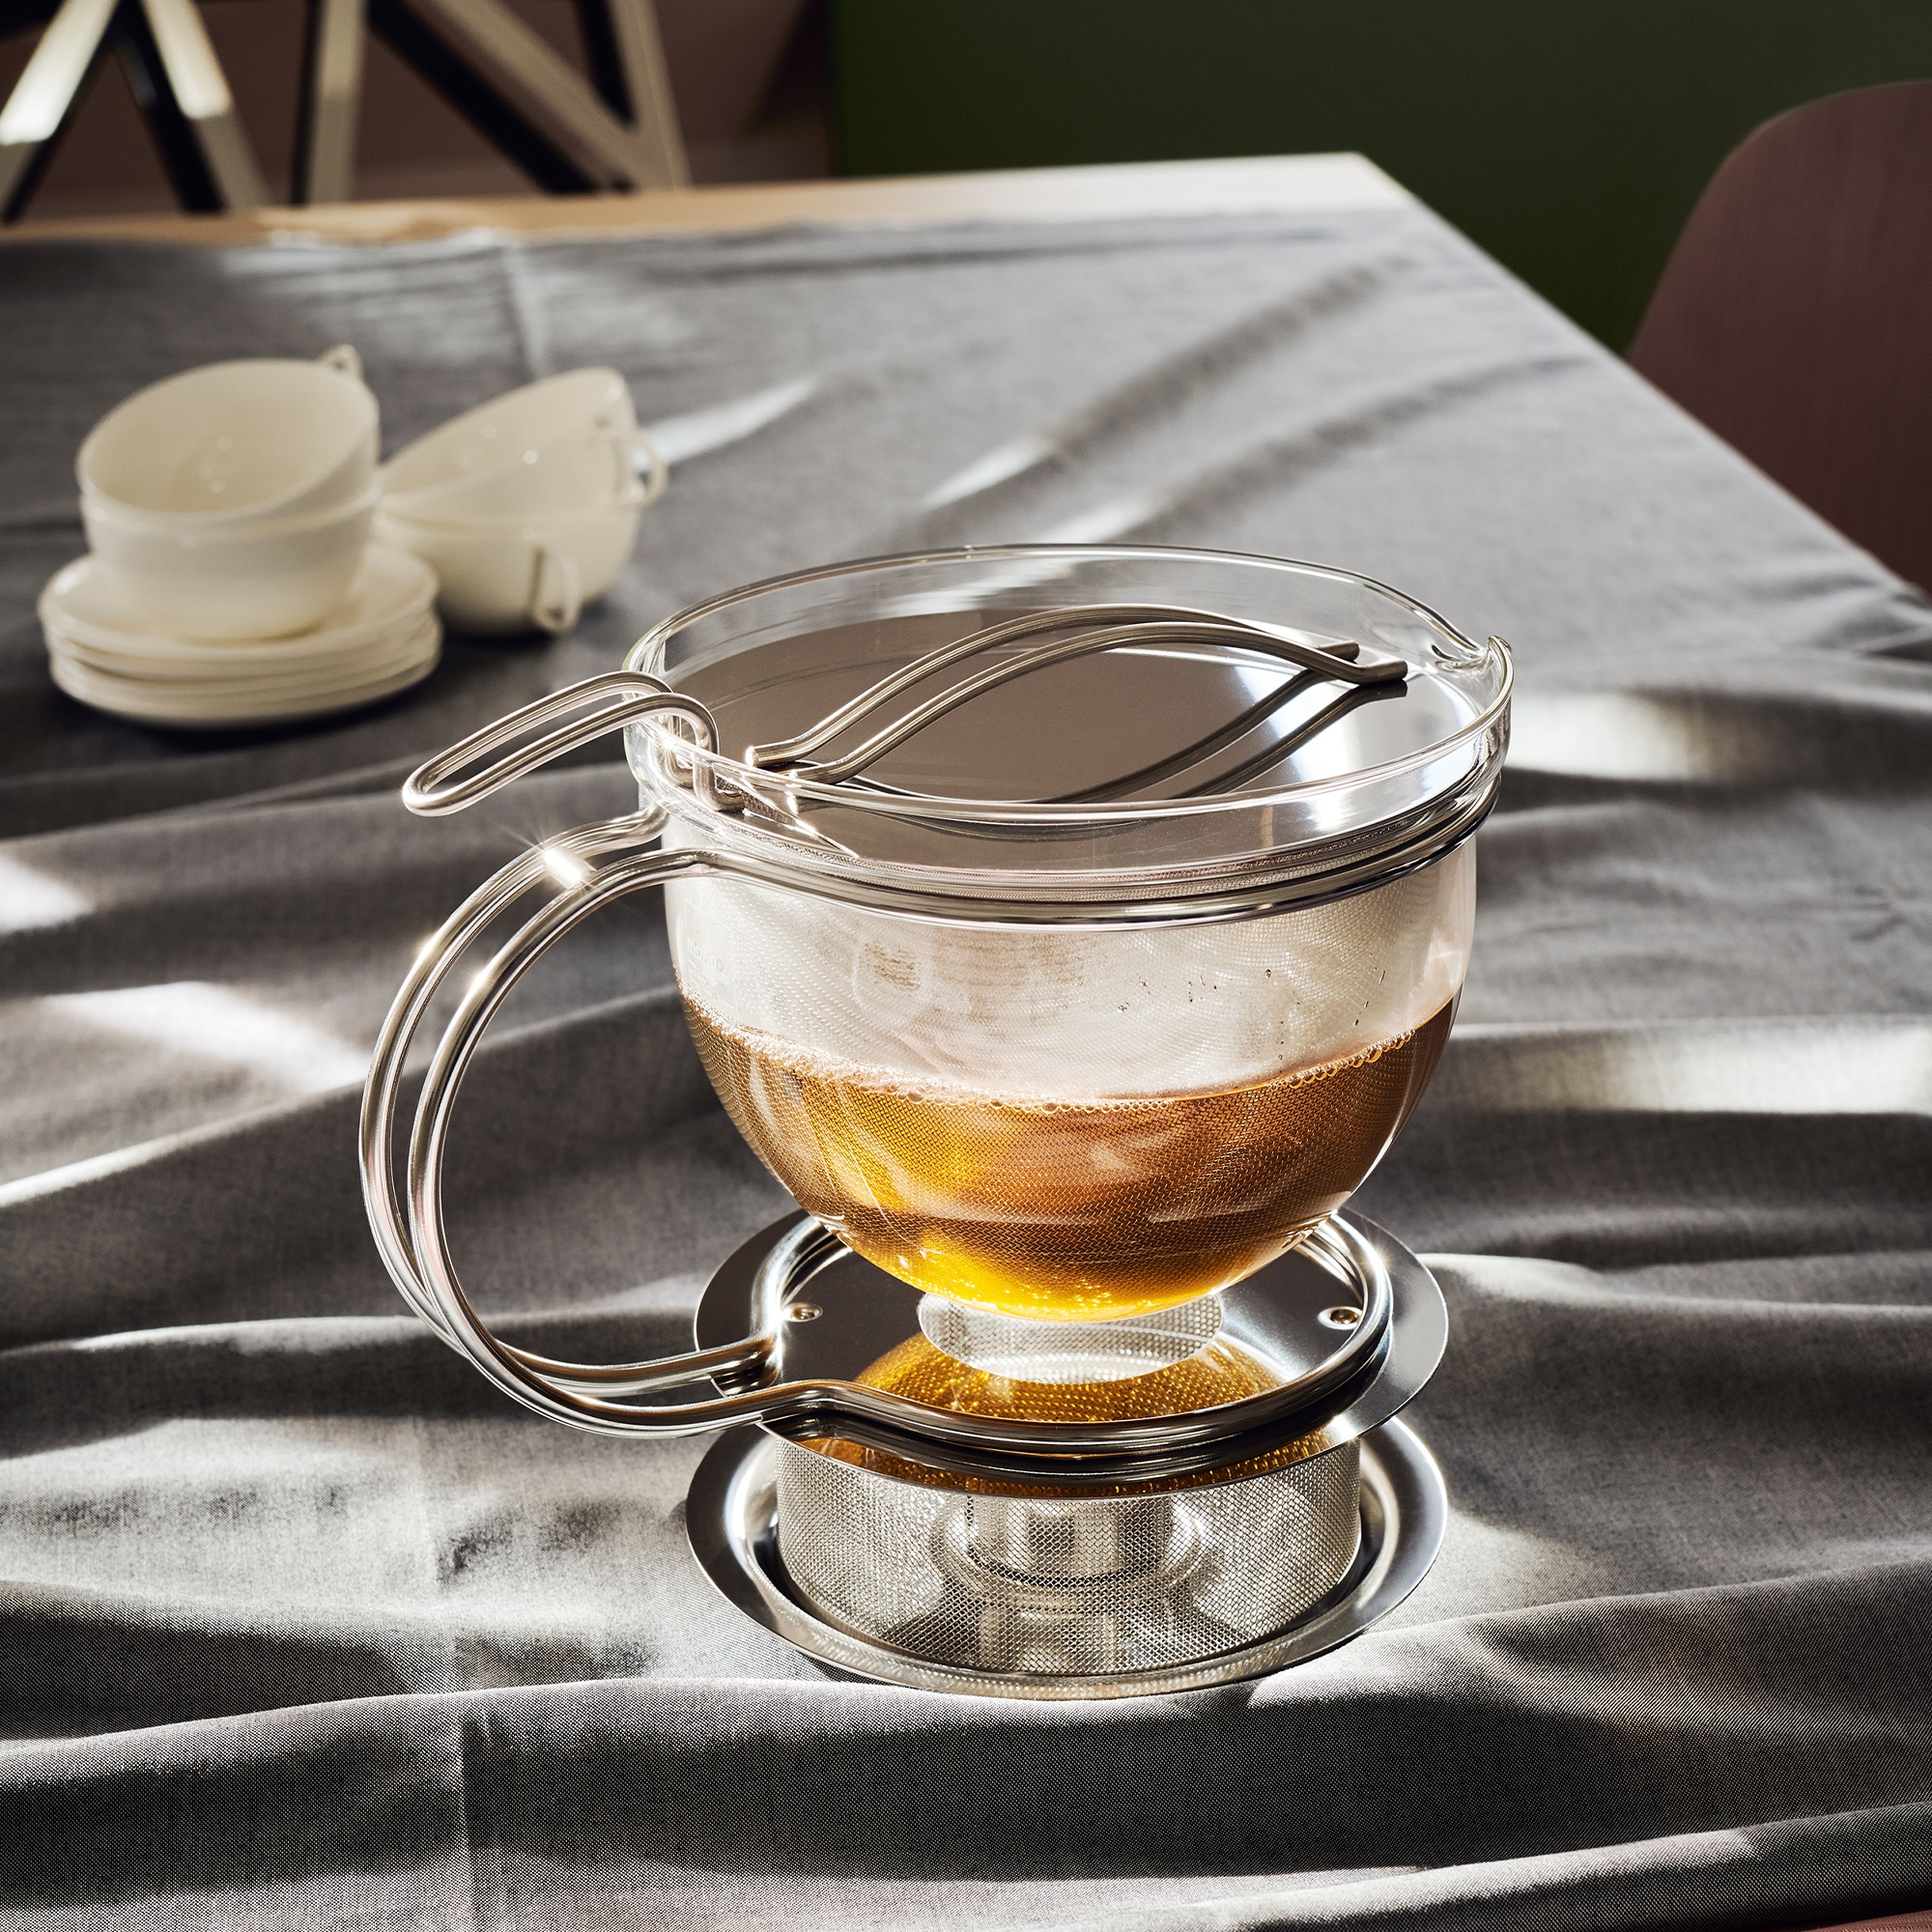 mono - filio teacup with saucer